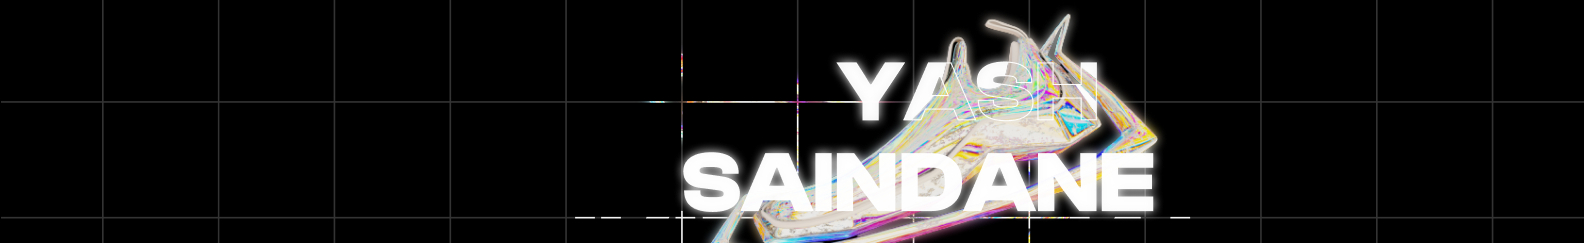 Banner de perfil de Yash Saindane